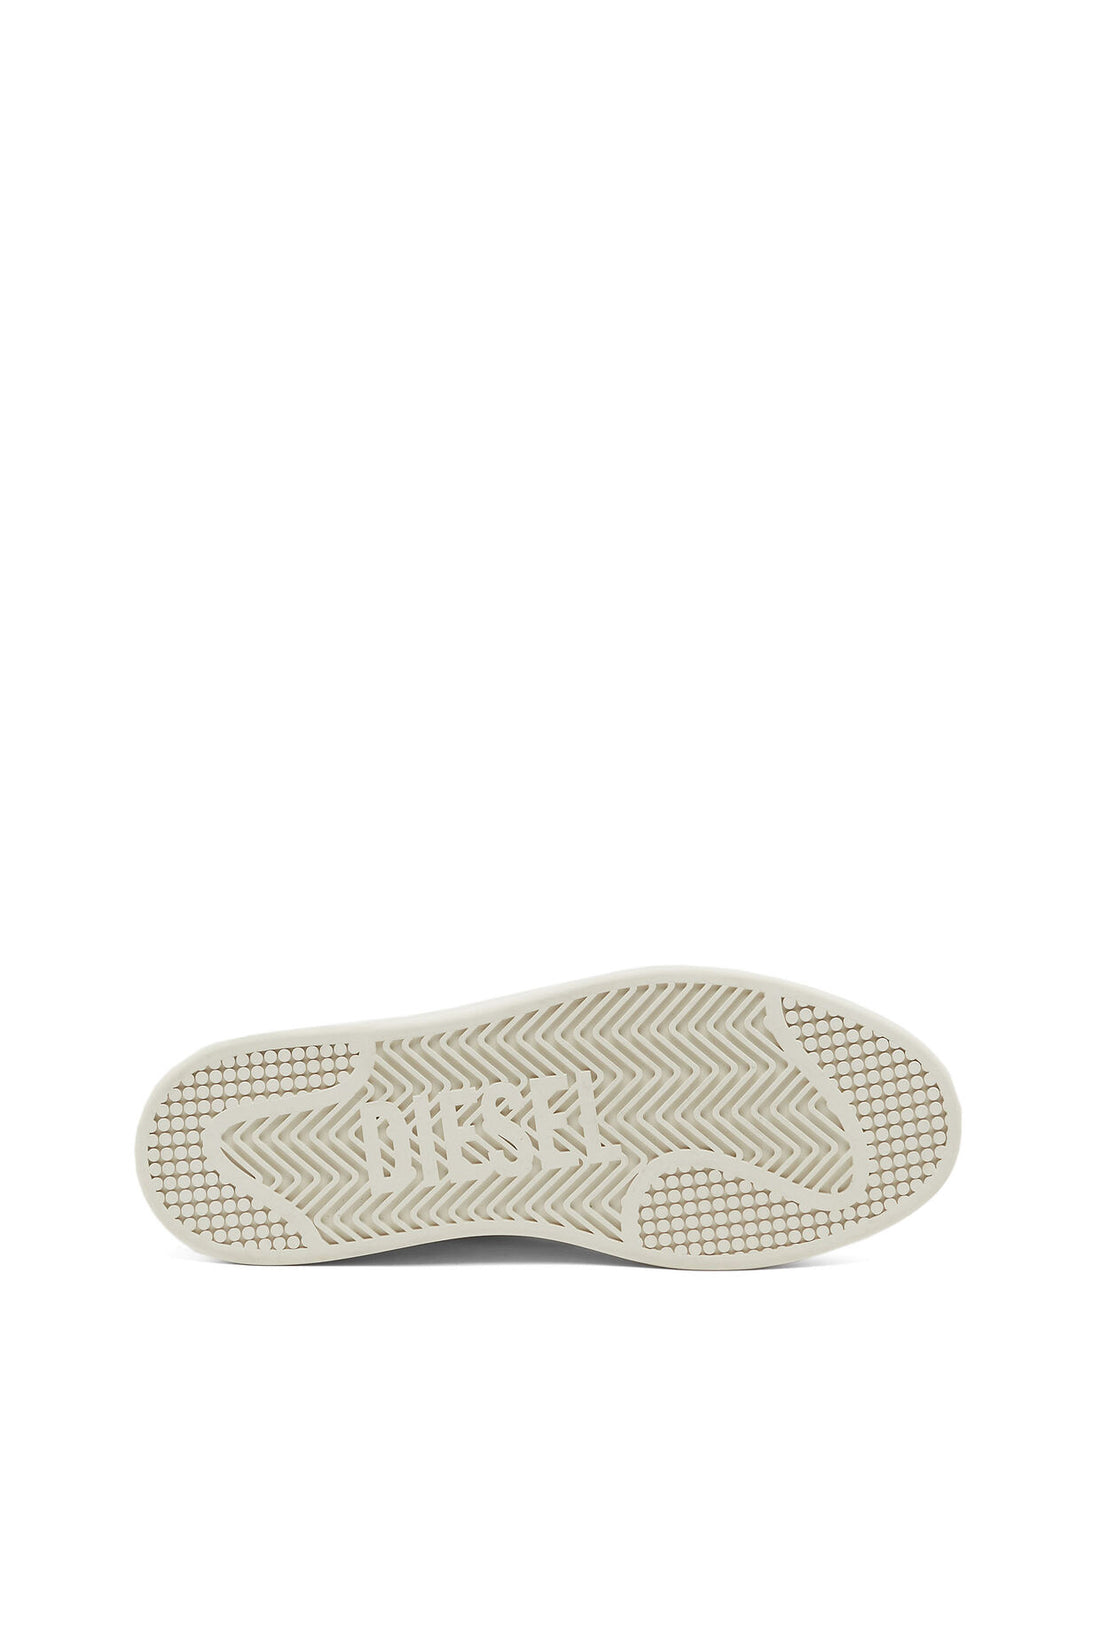 Diesel ATHENE LOW Sneaker | Nuthatch/White